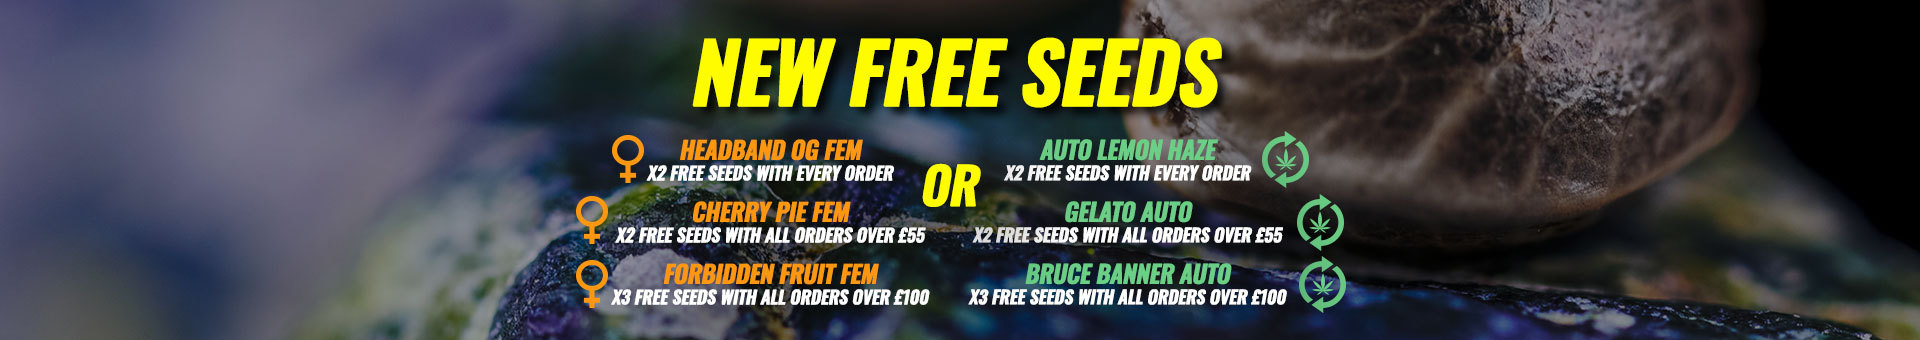 New Free Seeds